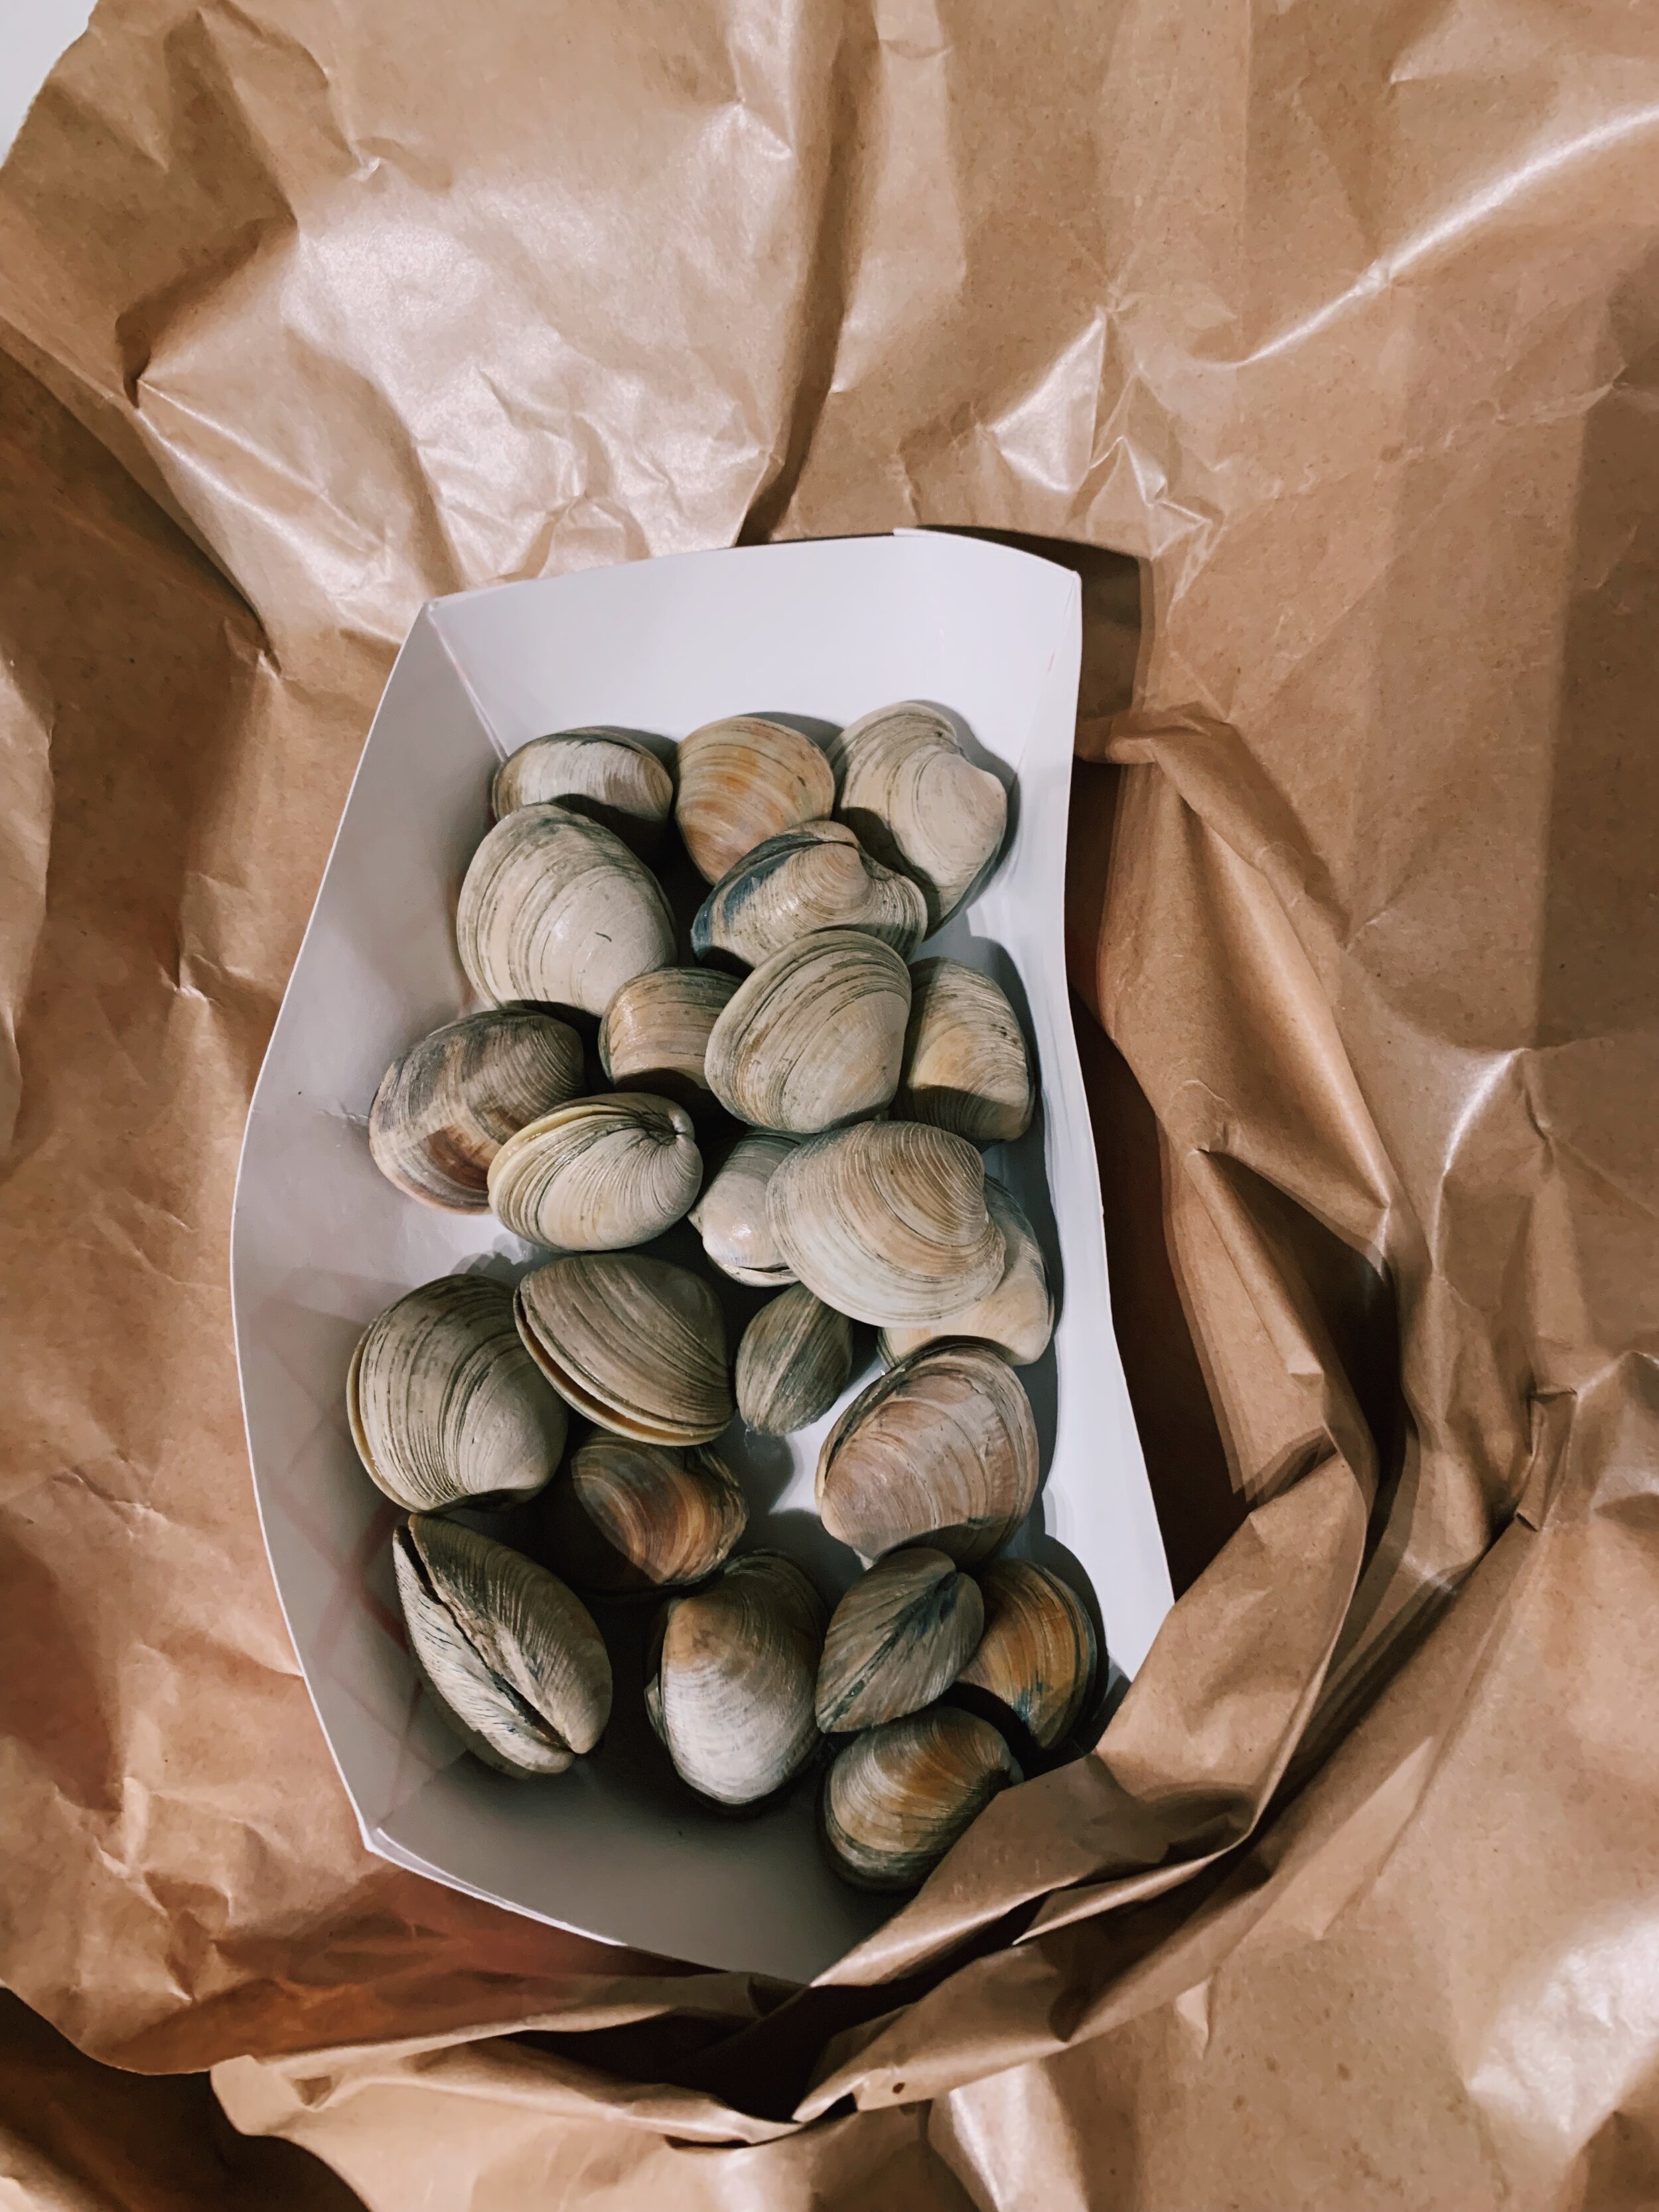 clam-pasta-chorizo-walnuts-alison-roman-clams-2.jpg